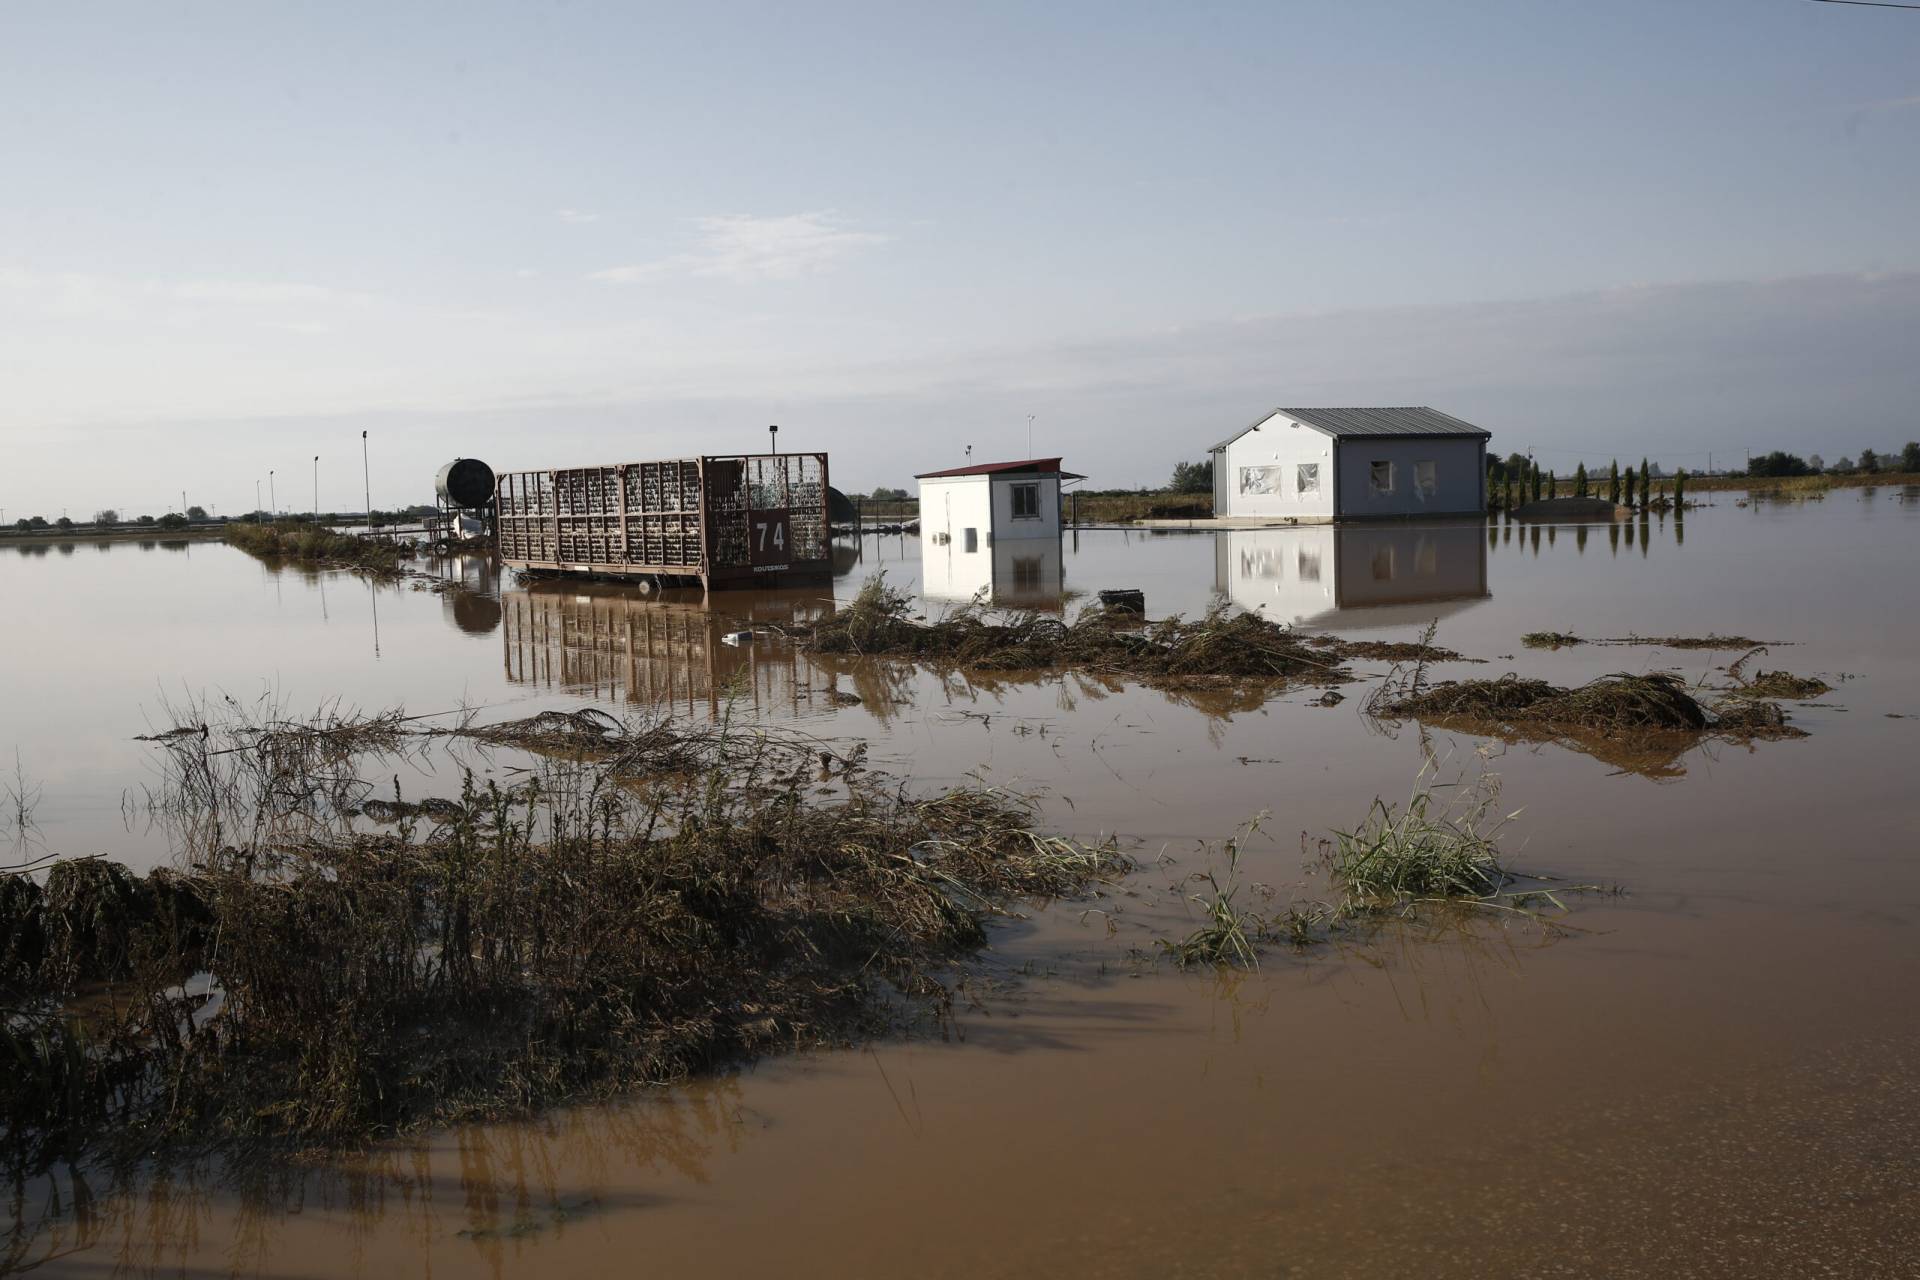 Yπουργείο Υγείας: Σημαντικές οδηγίες για προστασία μετά από πλημμύρα